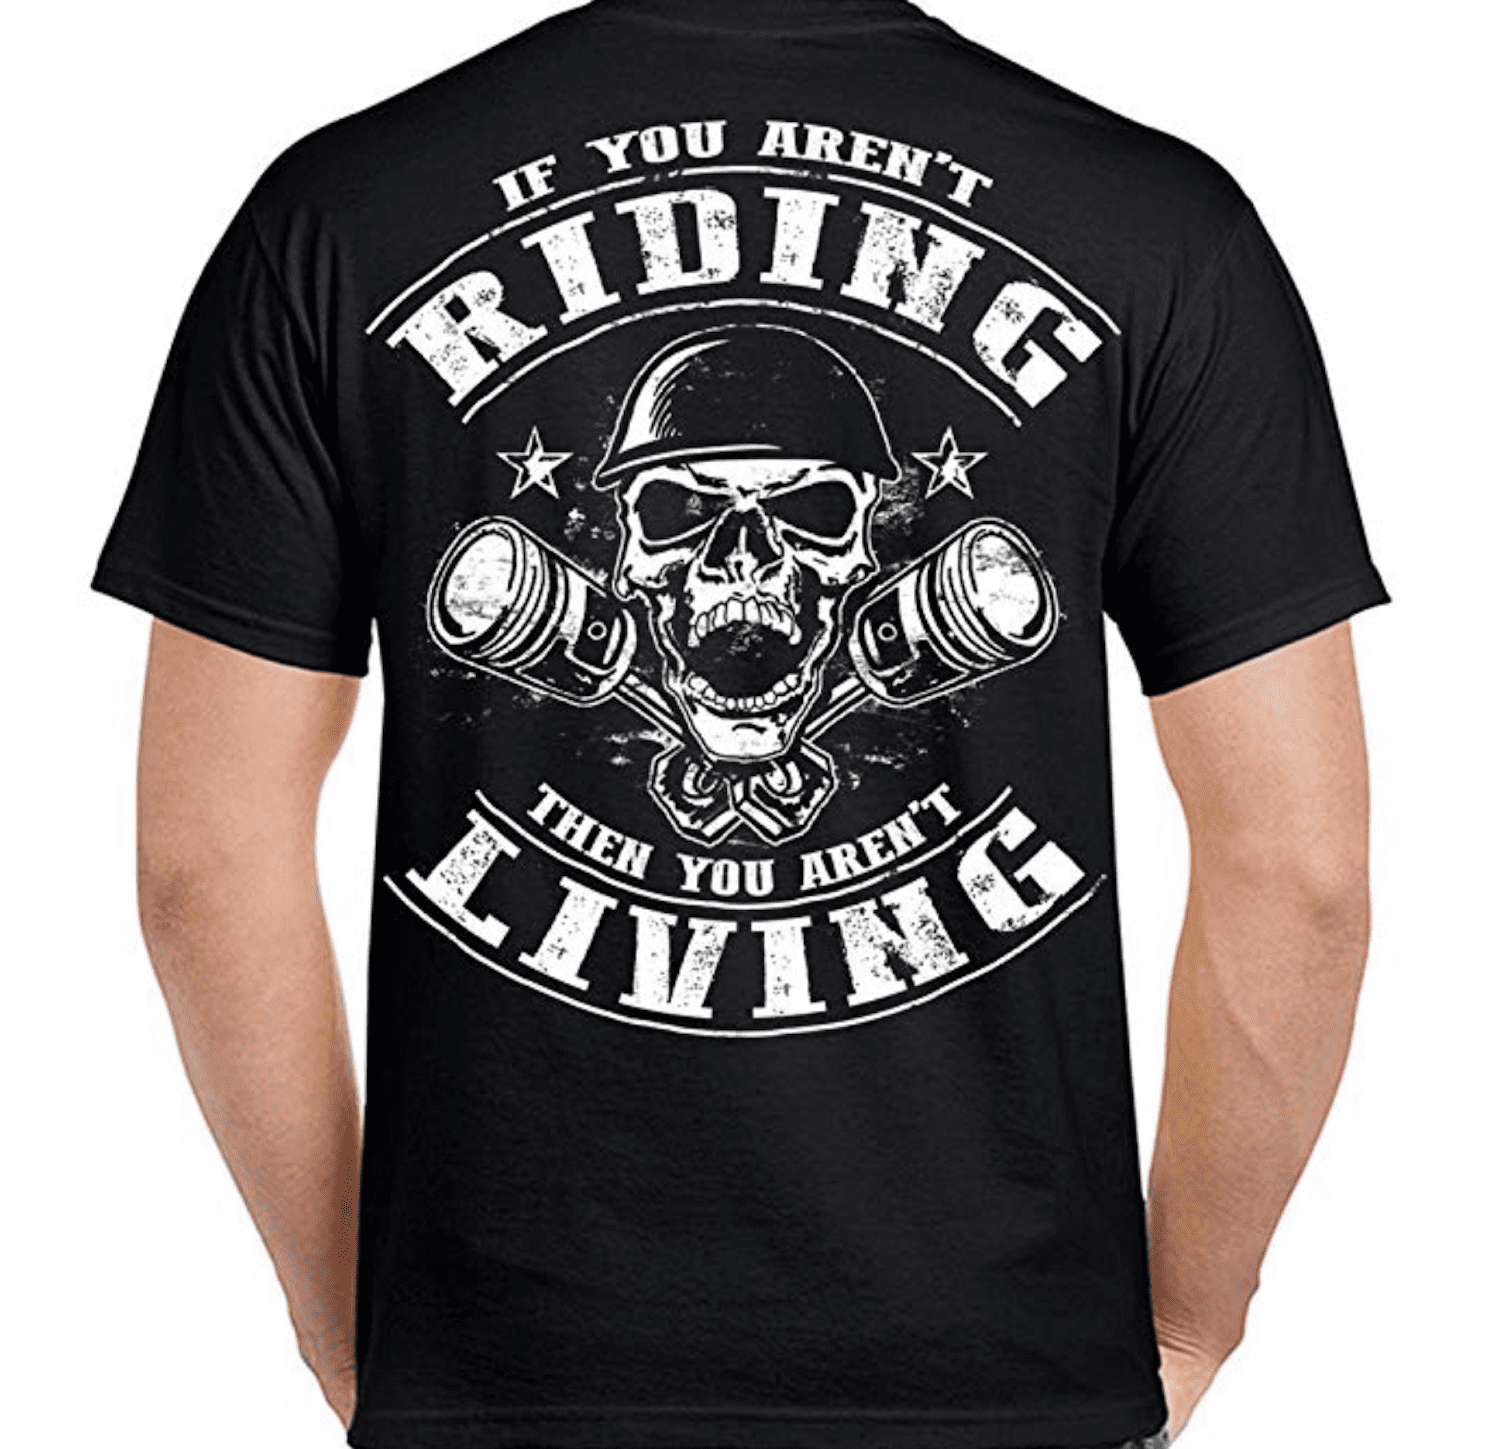 if you aren't riding shirt